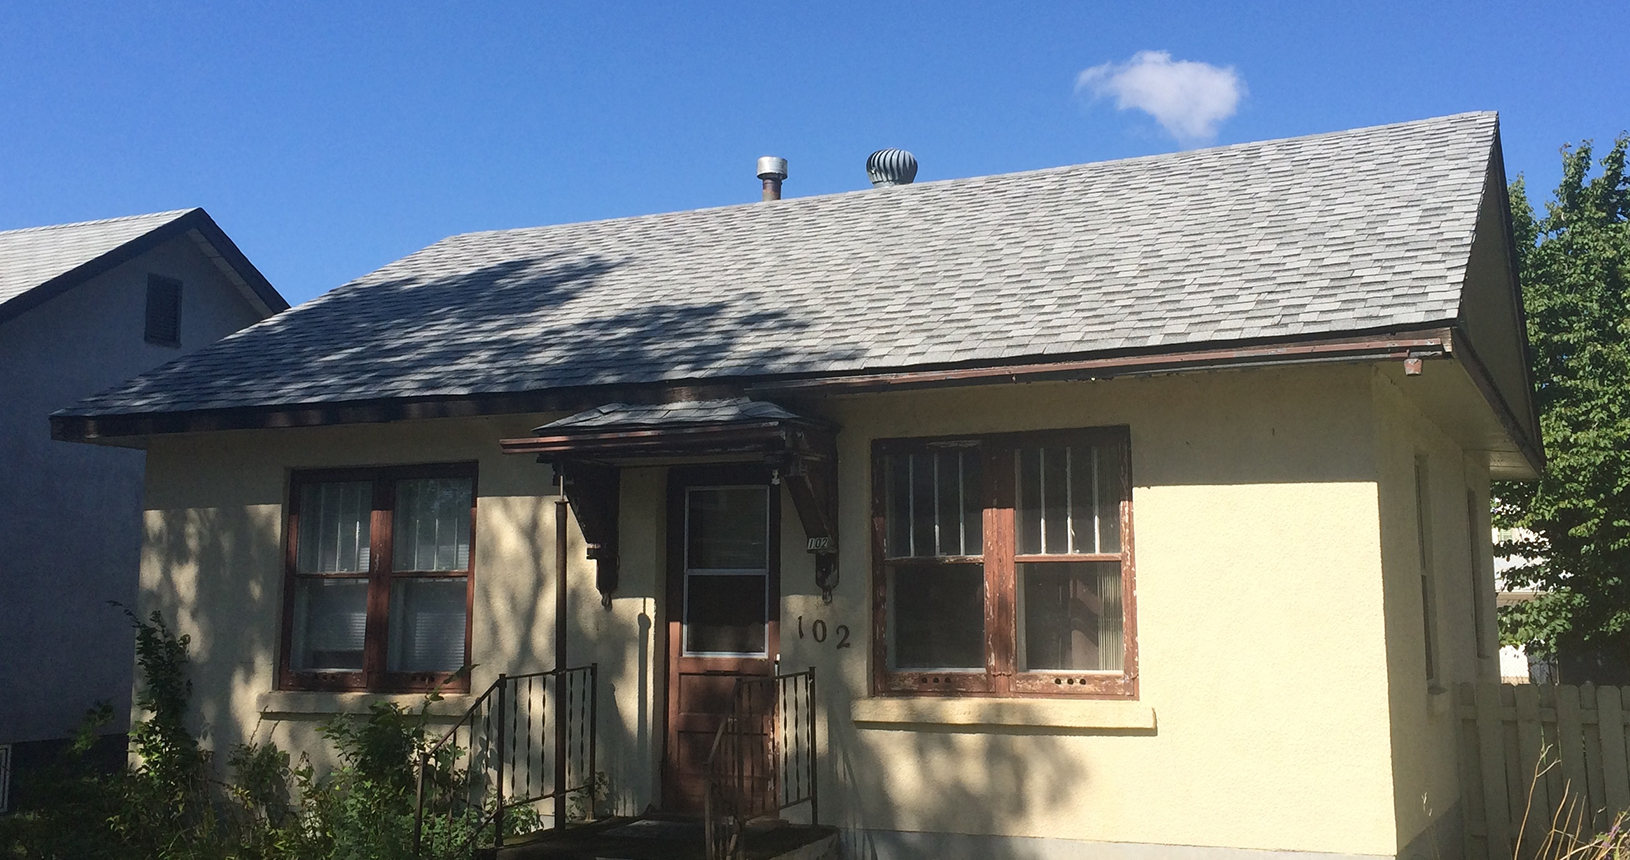 J&M Roofing Services: Asphalt Shingle Residential Roof